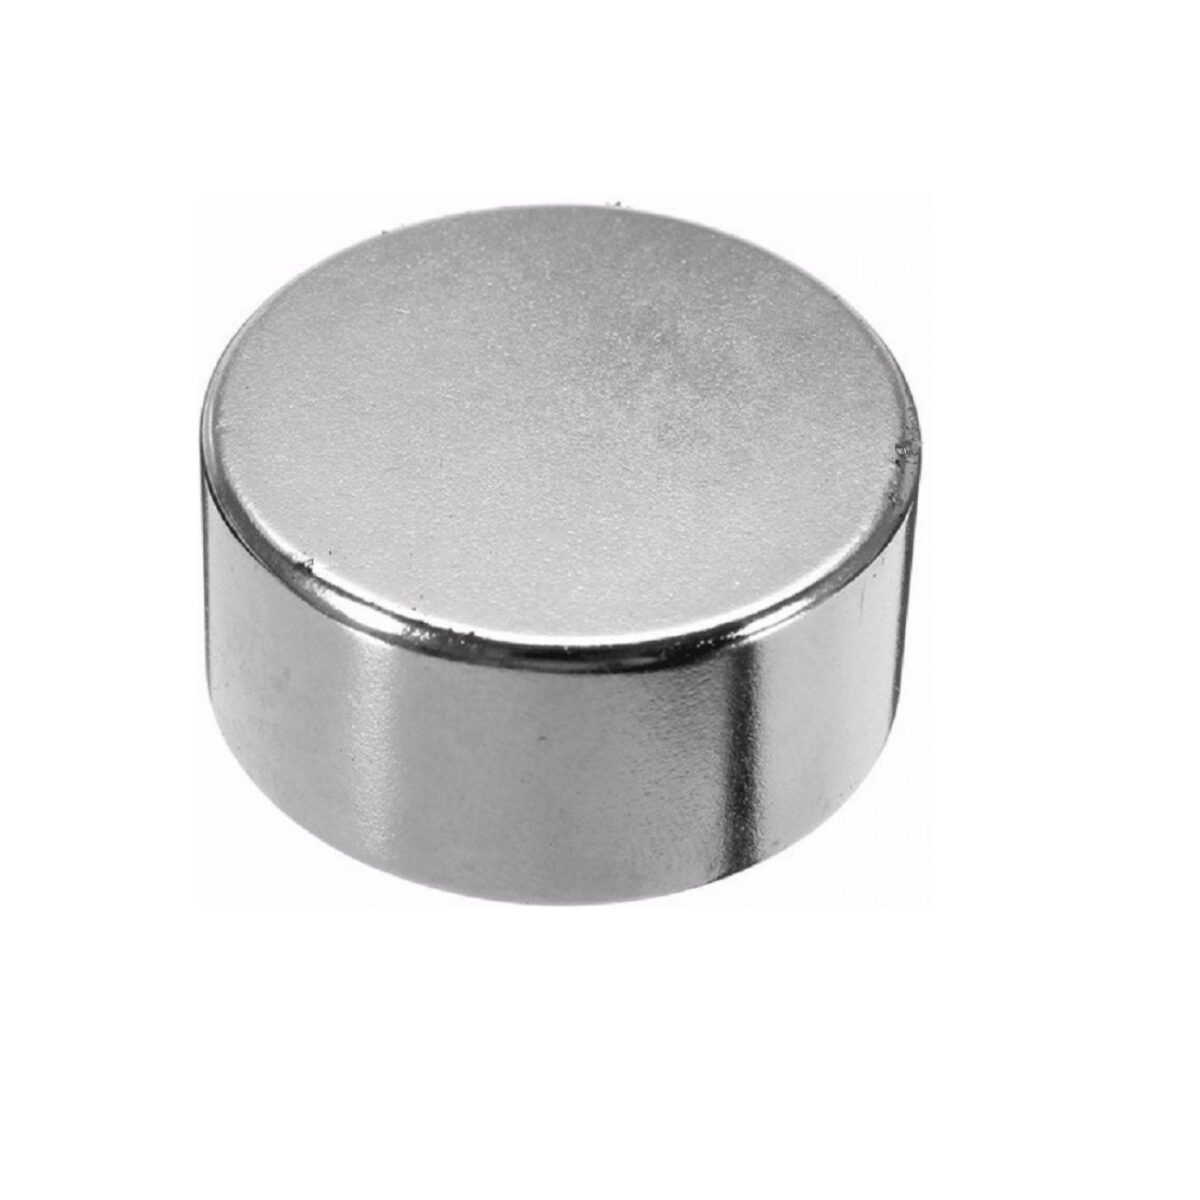 Neodymium Disc Strong Magnet – 25mm x 12mm sharvielectronics.com